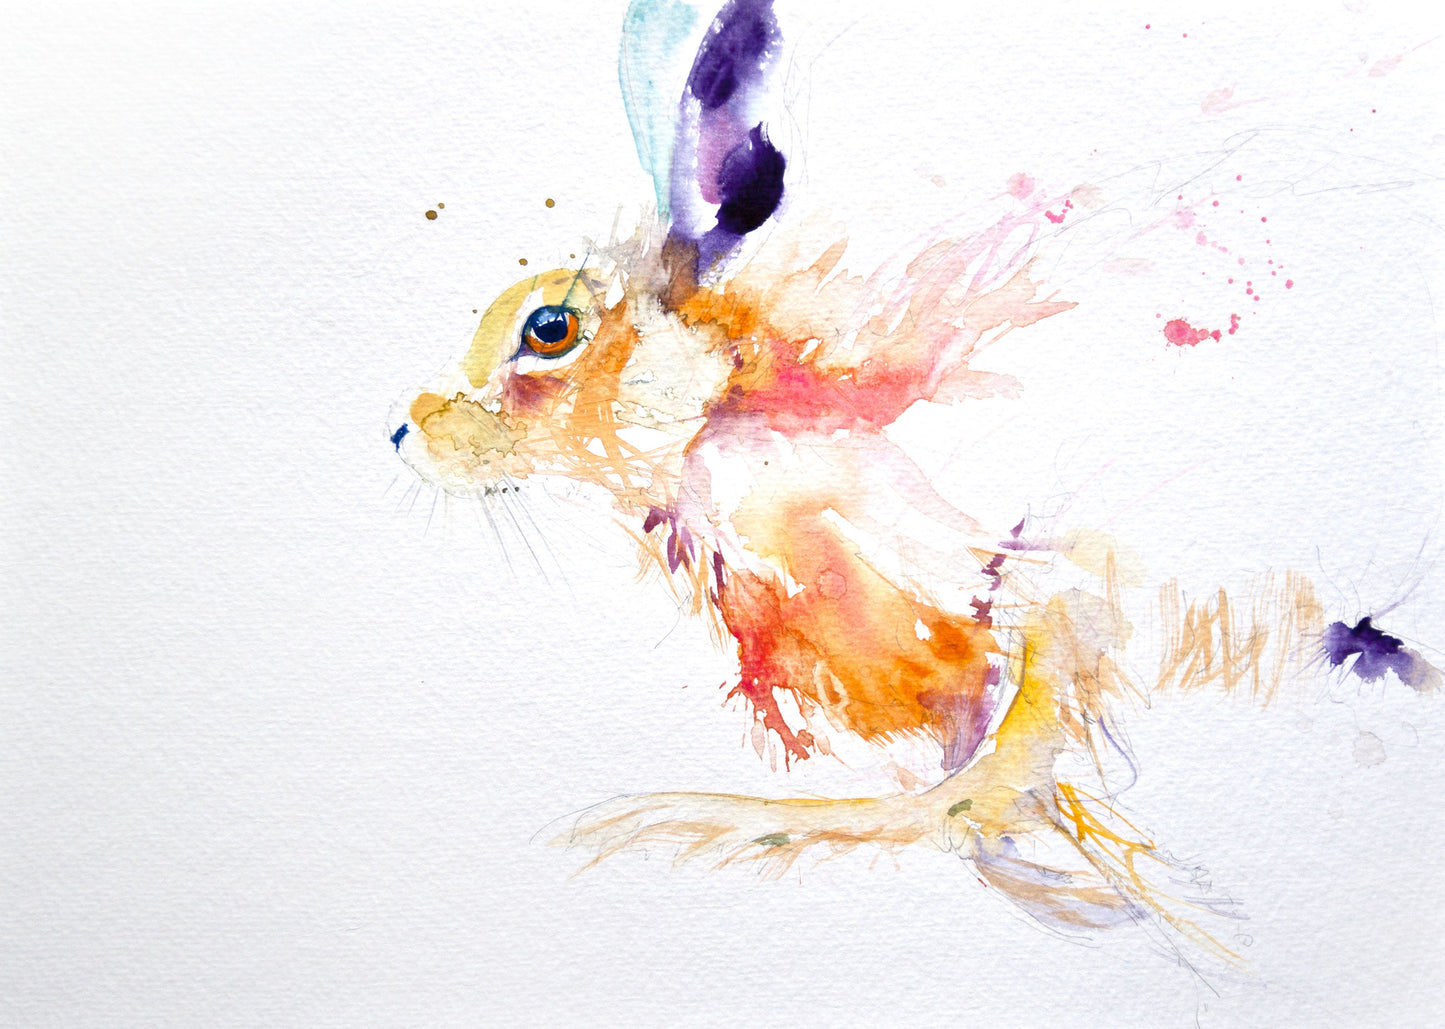 LIMITED EDITON PRINT 'Running Hare' - Jen Buckley Art limited edition animal art prints